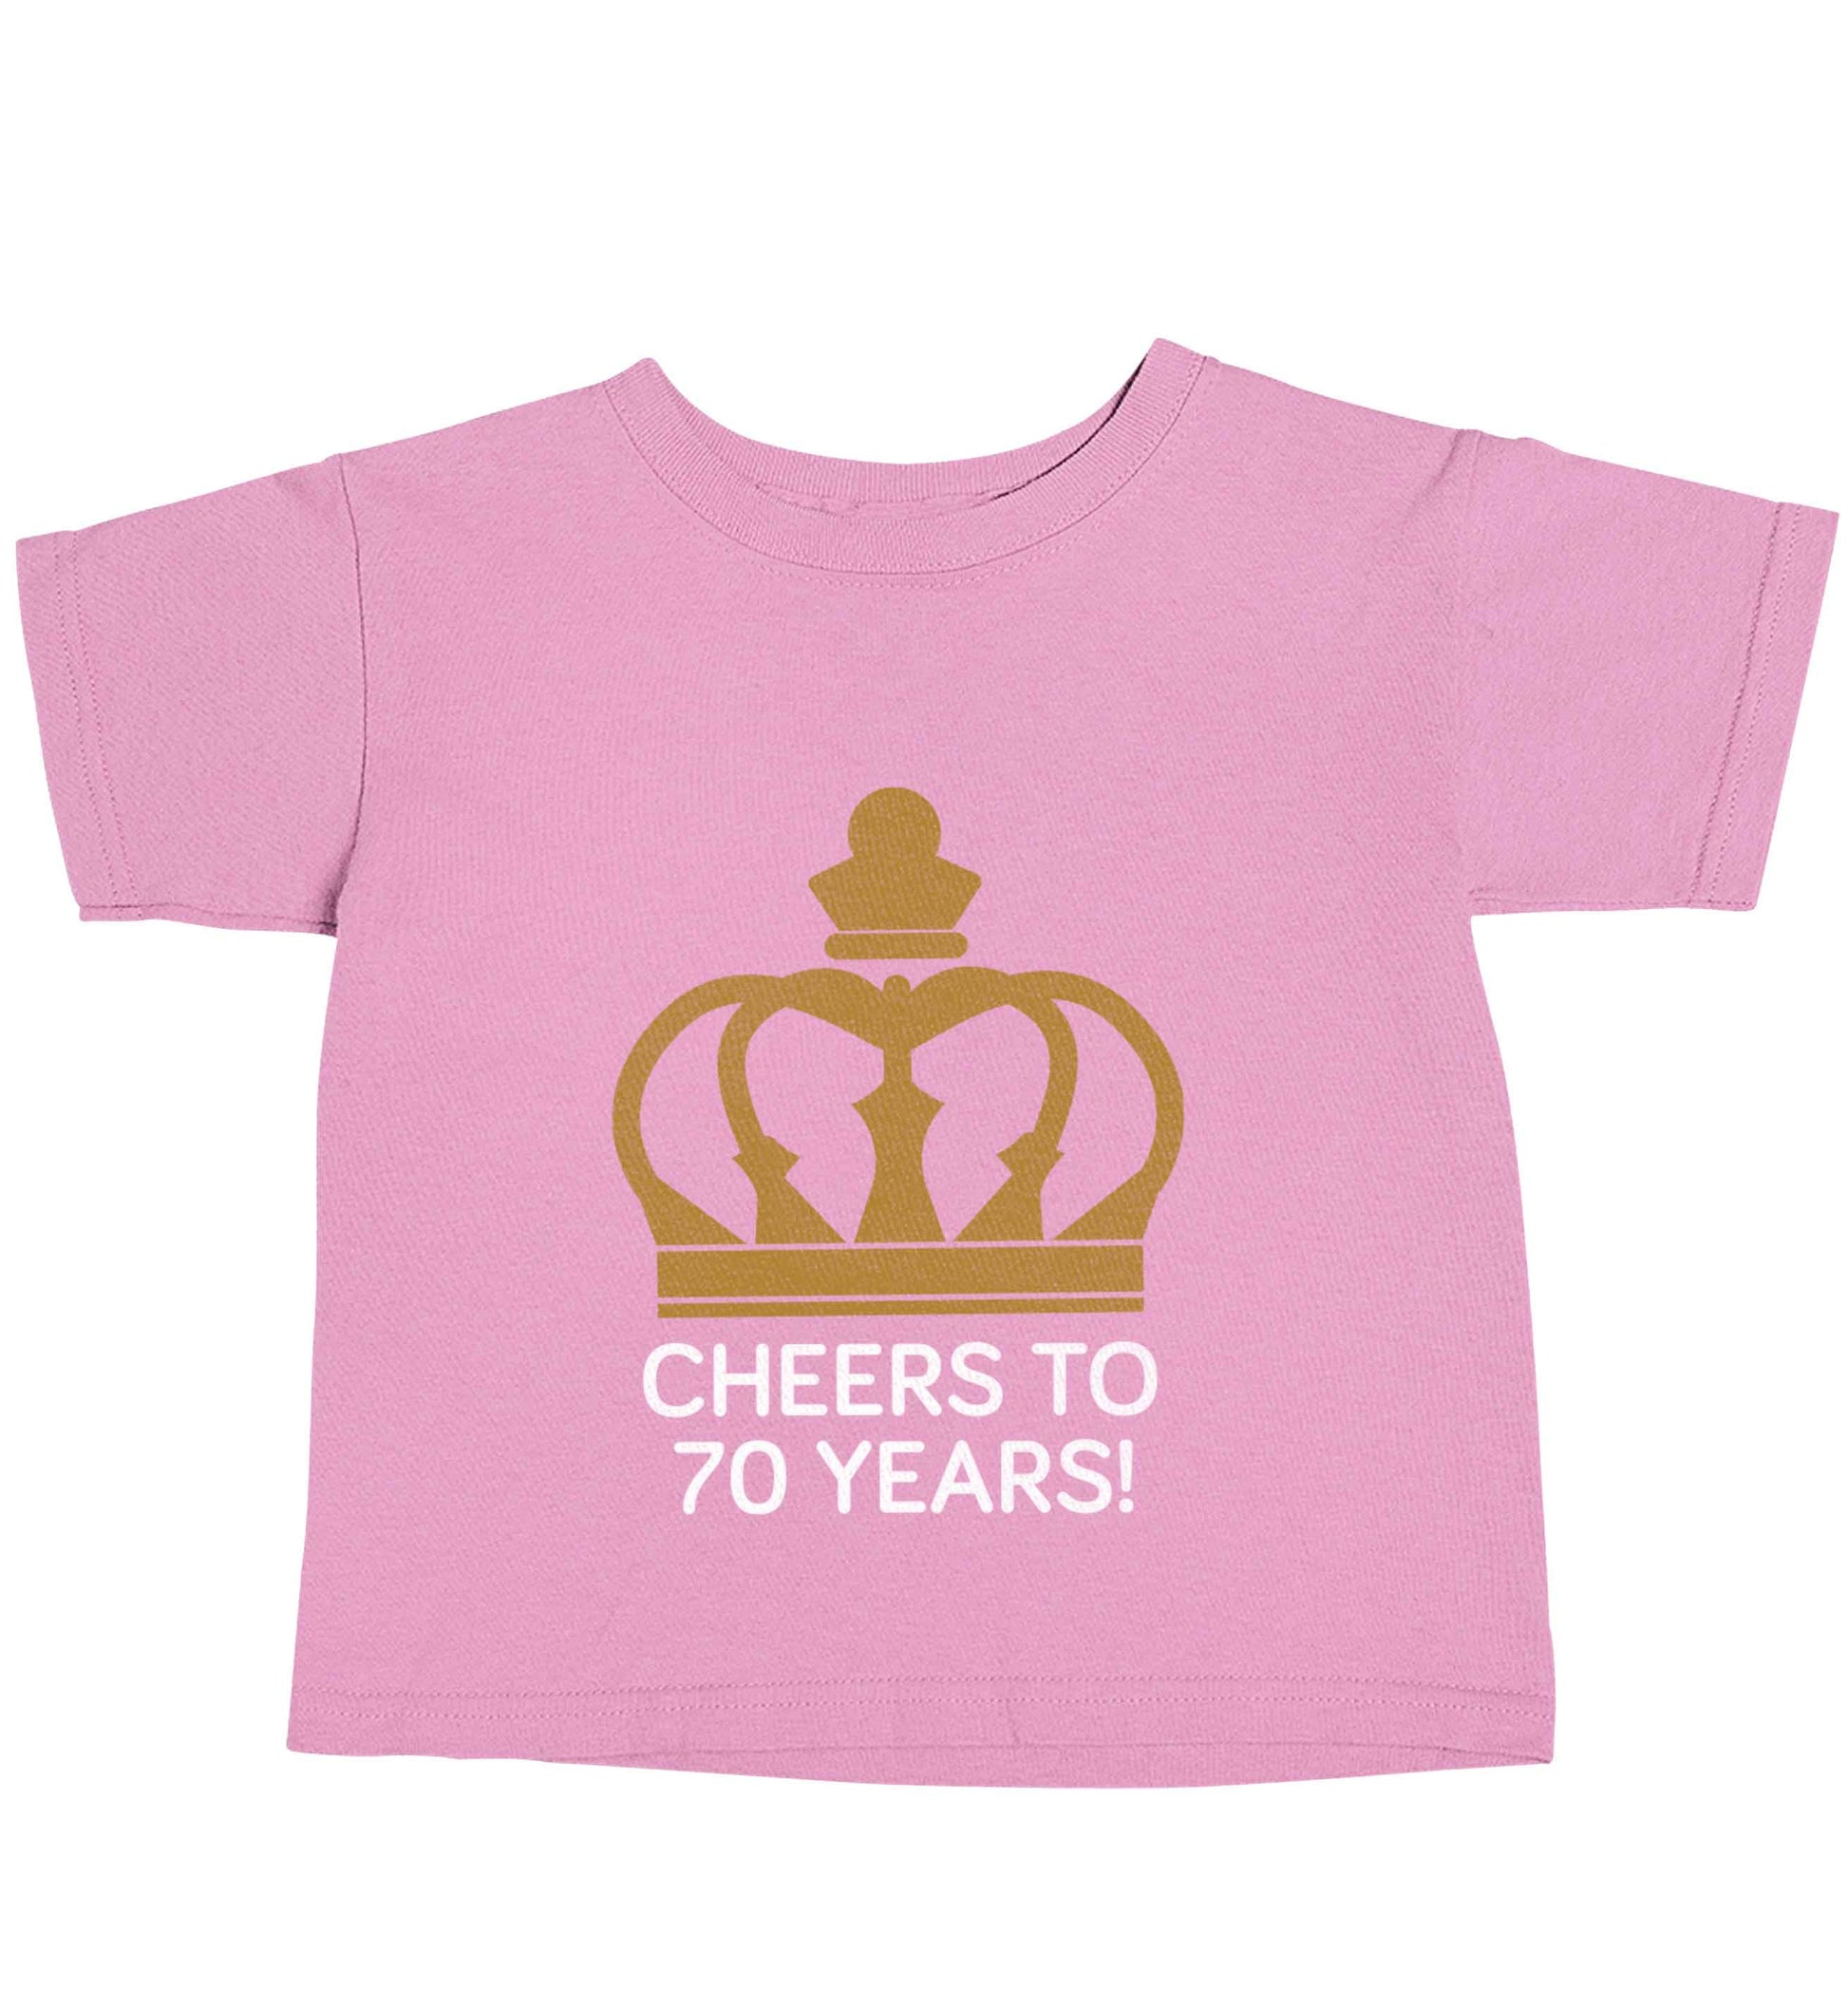 Cheers to 70 years! light pink baby toddler Tshirt 2 Years